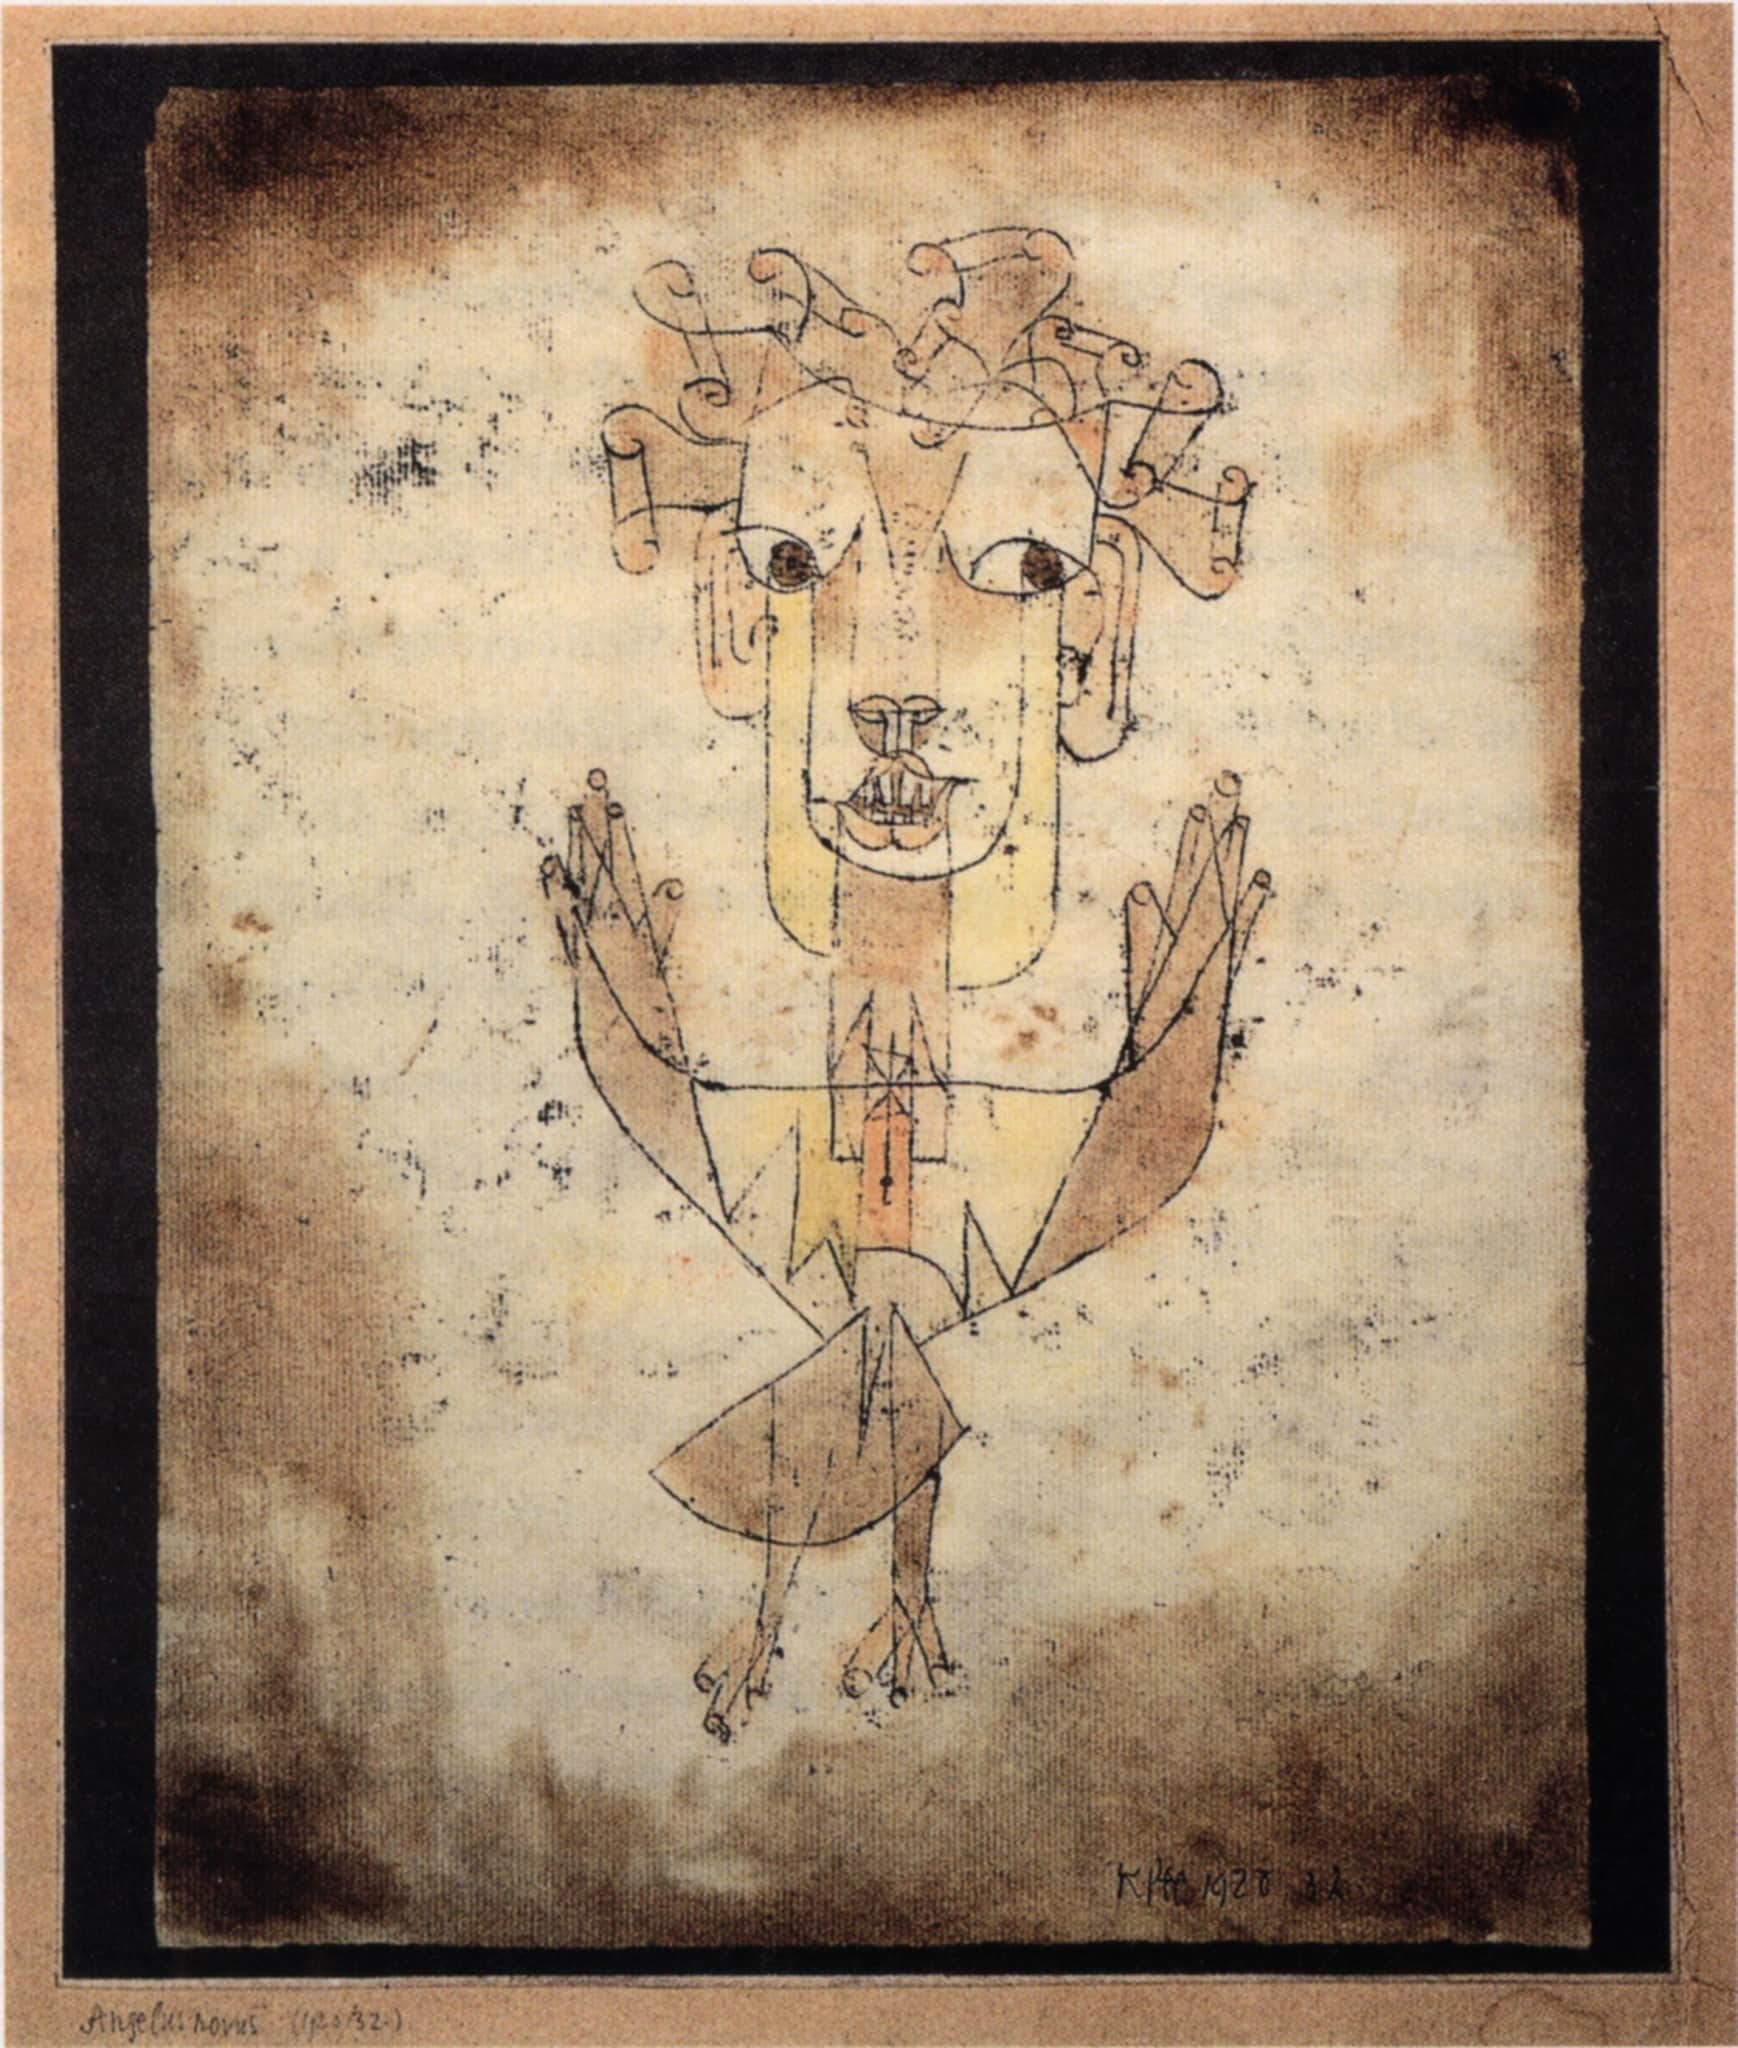 Paul Klee, Angelus Novus, 1920 (Israel Museum/Wikimedia Commons) spectator.org